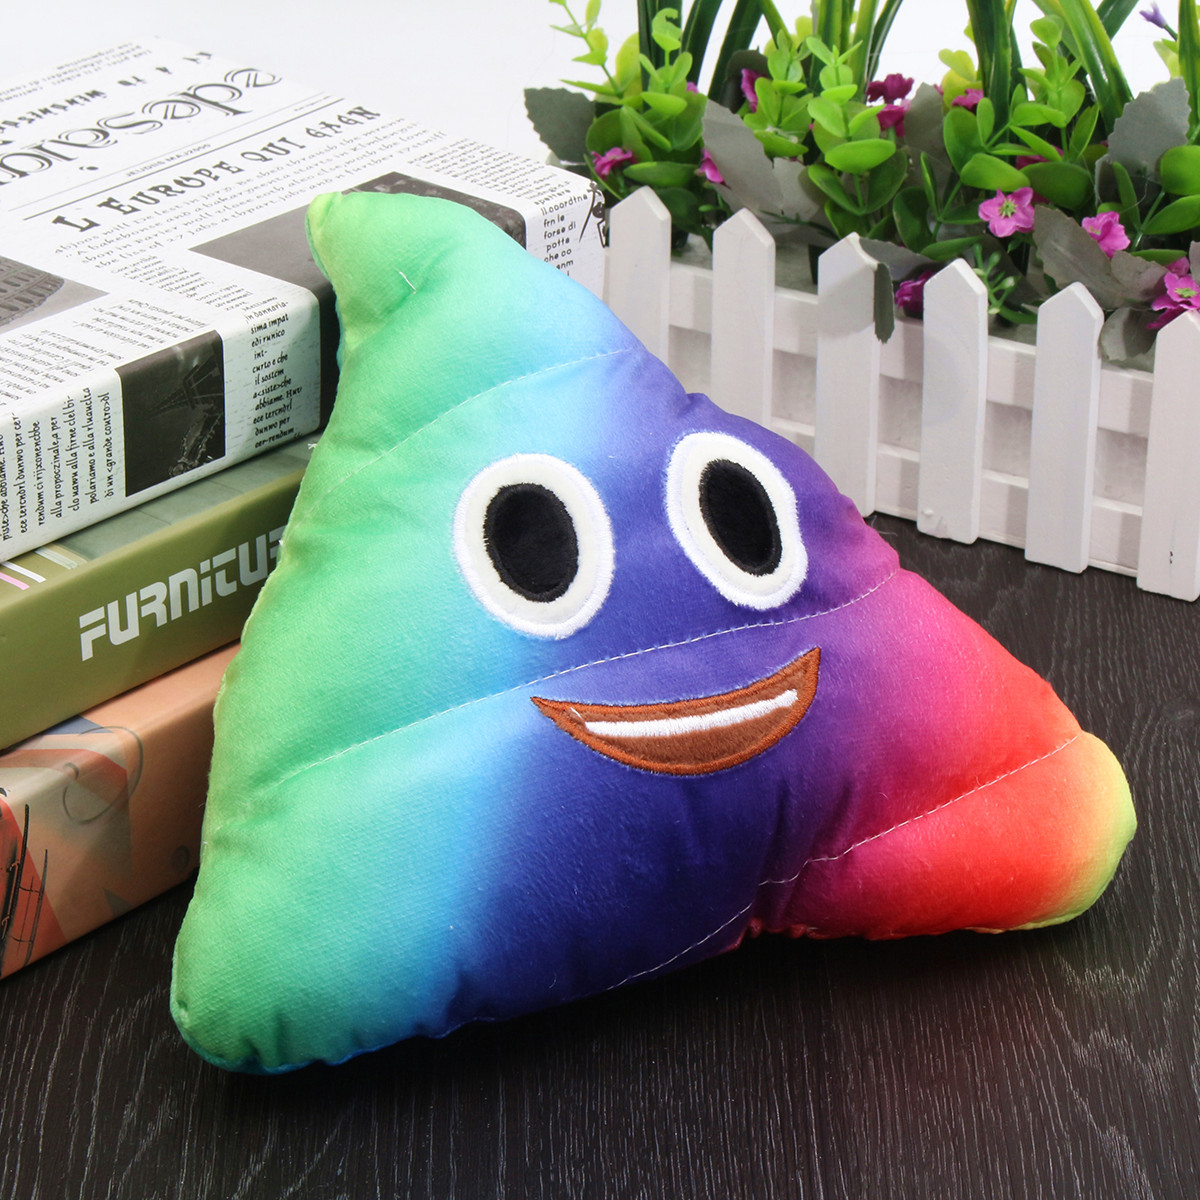 26x26cm-Plush-Funny-Soft-Toy-Colorful-Emoji-Emoticon-Poop-Shape-Pillow-Home-Office-Car-Cushion-1099639